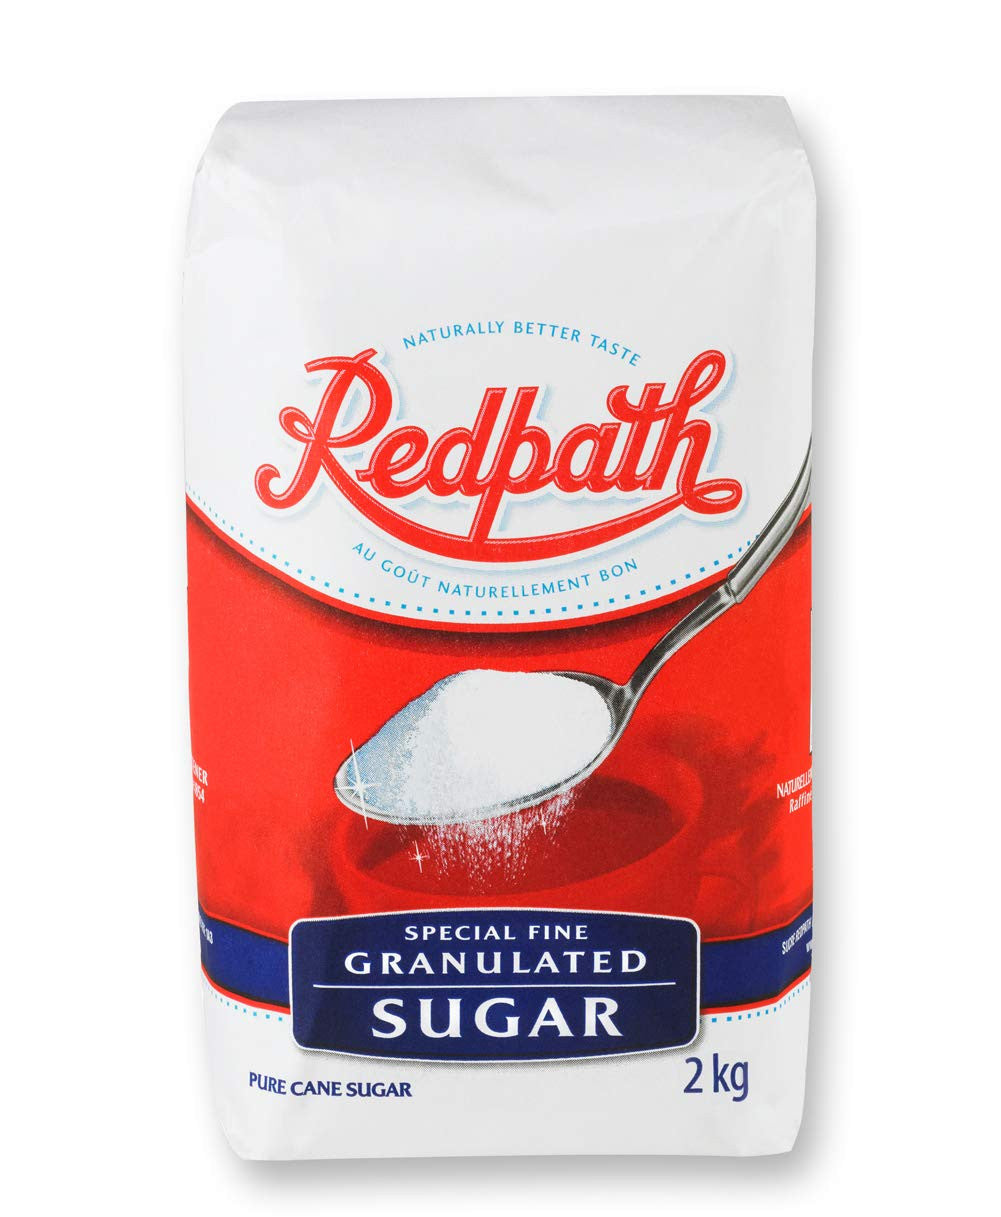 REDPATH SUGAR Granulated Sugar, 2 KG/4.4lb. Bag, {Imported from Canada}